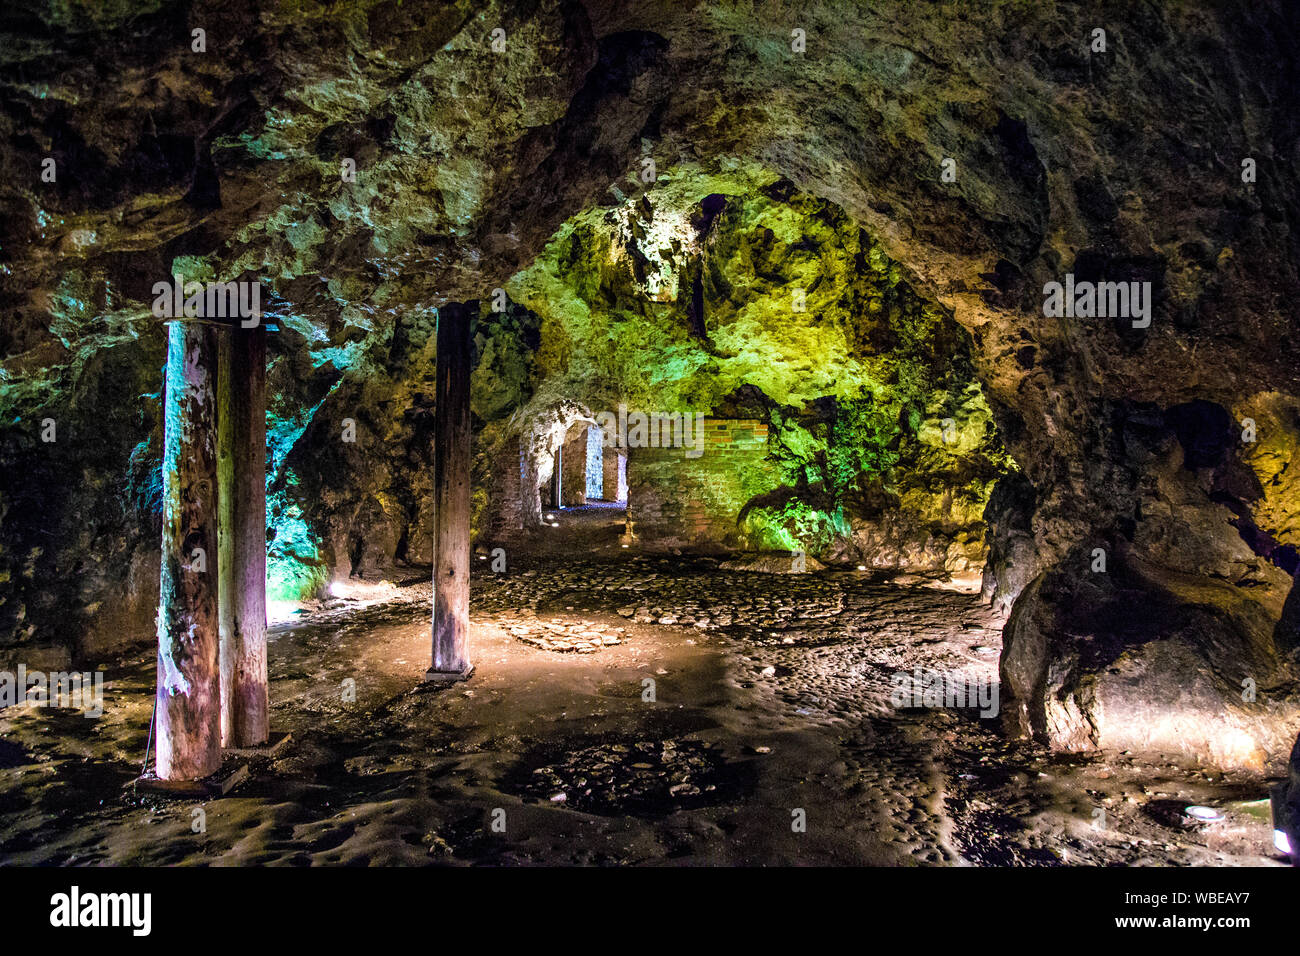 Dragon's Den (Smocza Jama) - a limestone cave in the Wawel Hill where the legendary dragon resided, Krakow, Poland Stock Photo